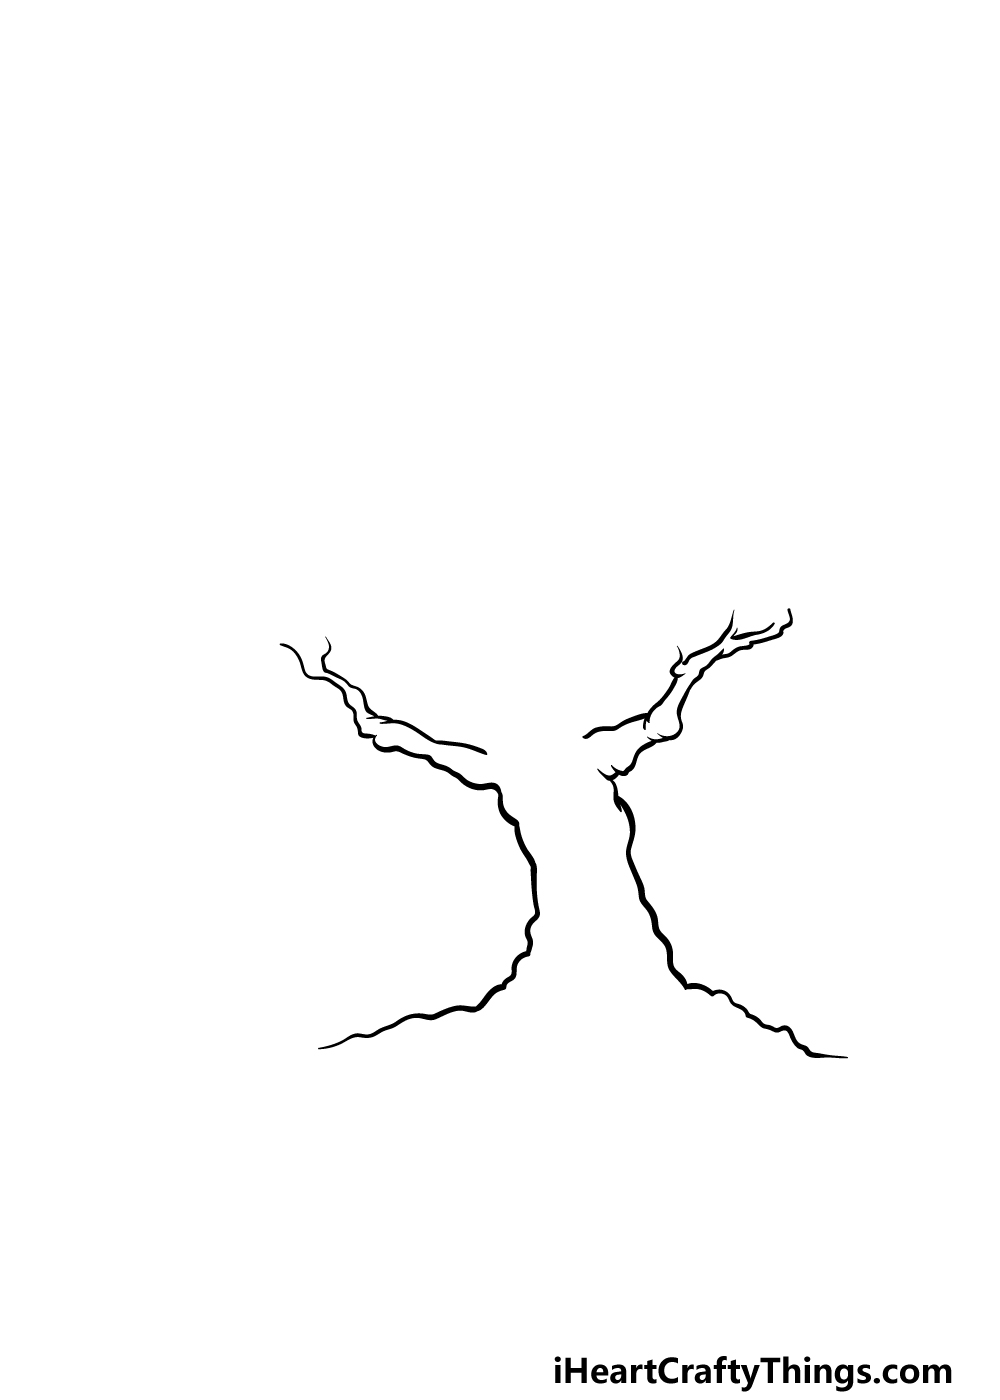 how to draw a Cartoon Tree step 1